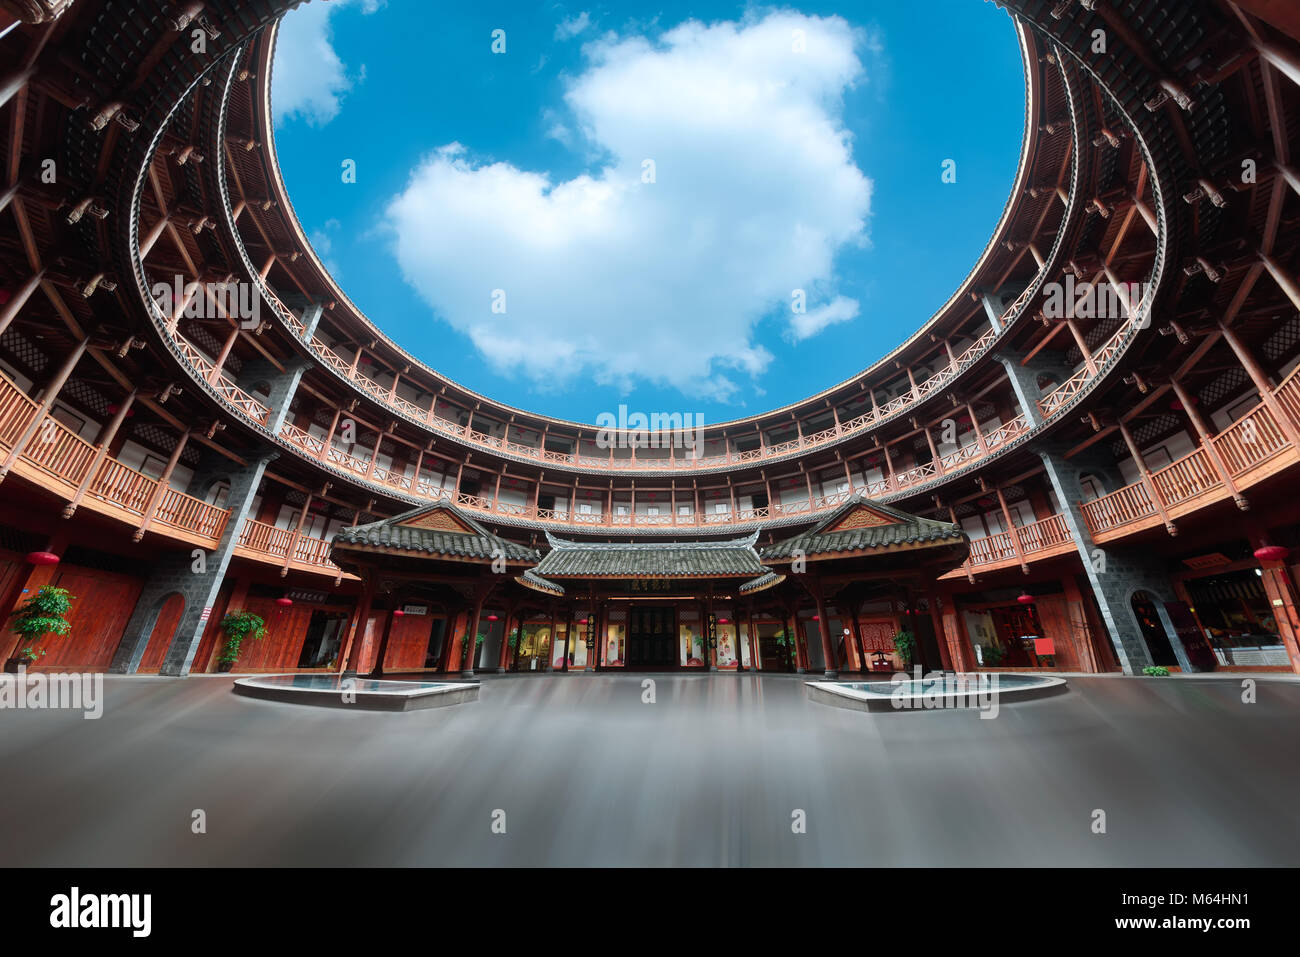 Luodai tulou (hakka roundhouse) in Chengdu,Sichuan province,China. Stock Photo